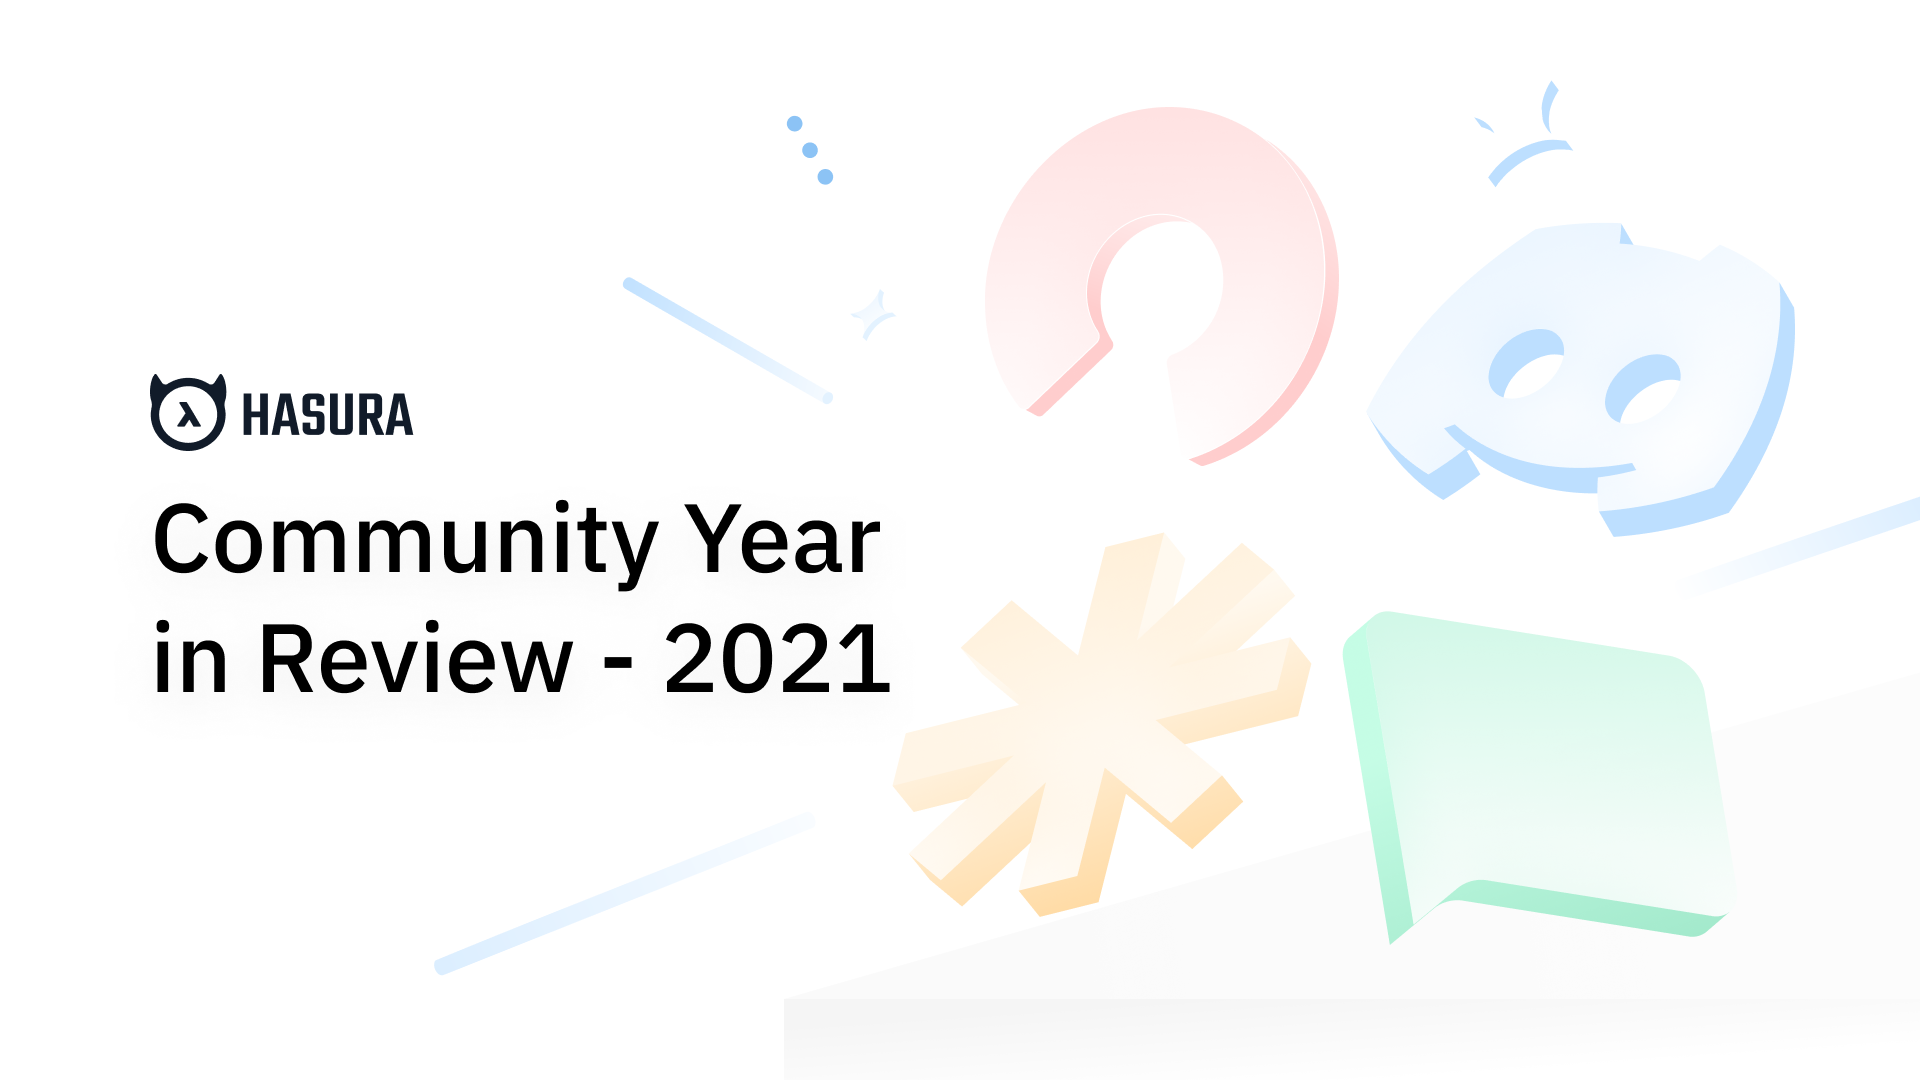 Hasura Community Year in Review - 2021